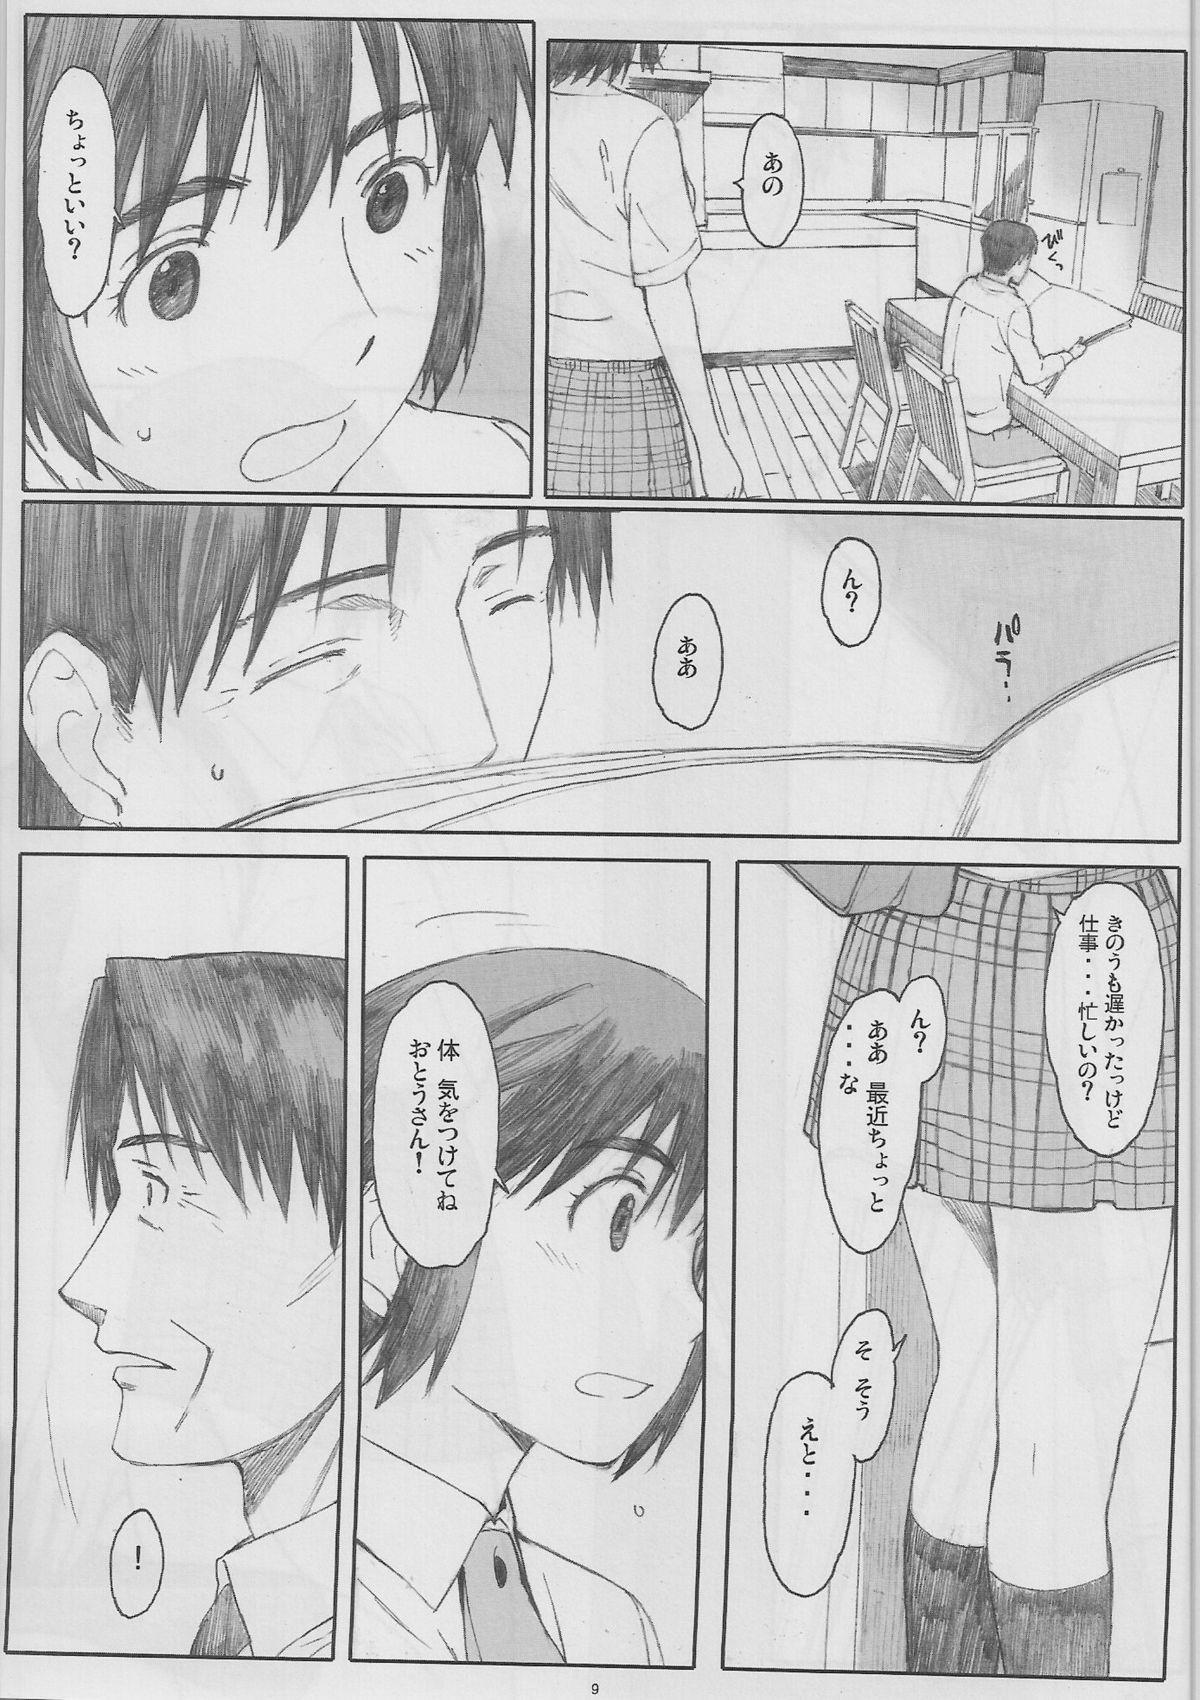 Tanned Natukaze! 6 - Yotsubato Face Sitting - Page 9